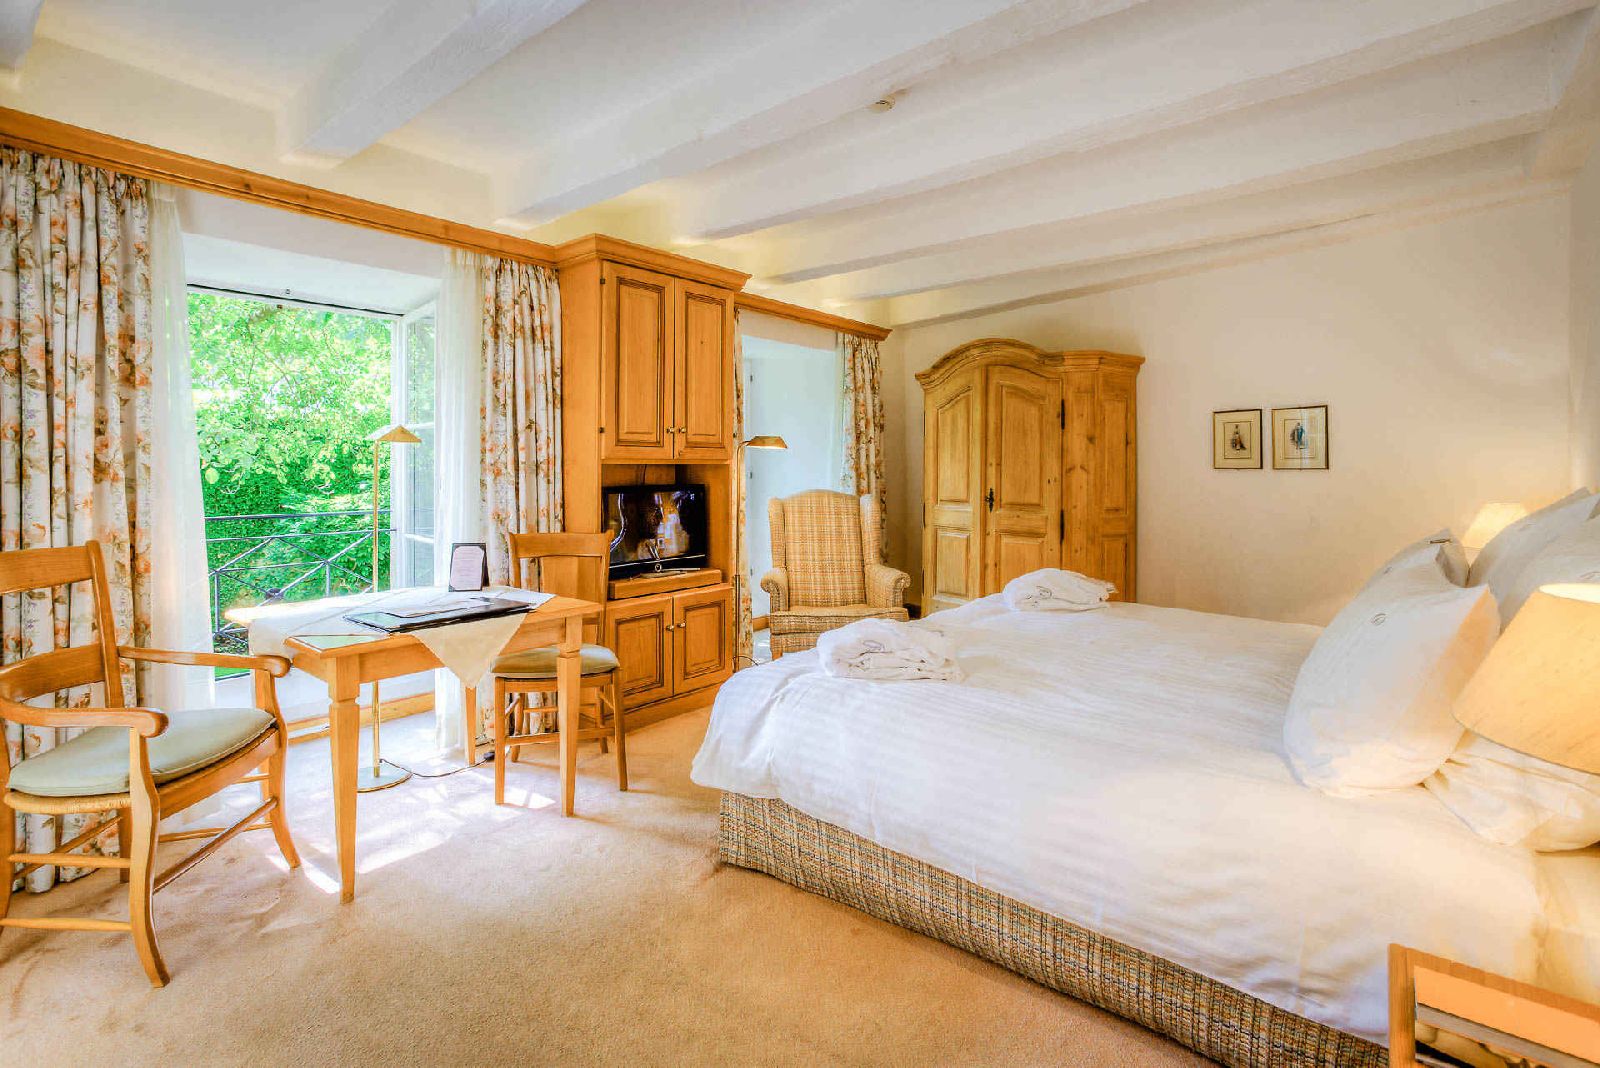 golf-expedition-golf-reizen-frankrijk-regio-elzas-hotel-a-la-cour-d'alsace-slaapkamer-houten-meubels